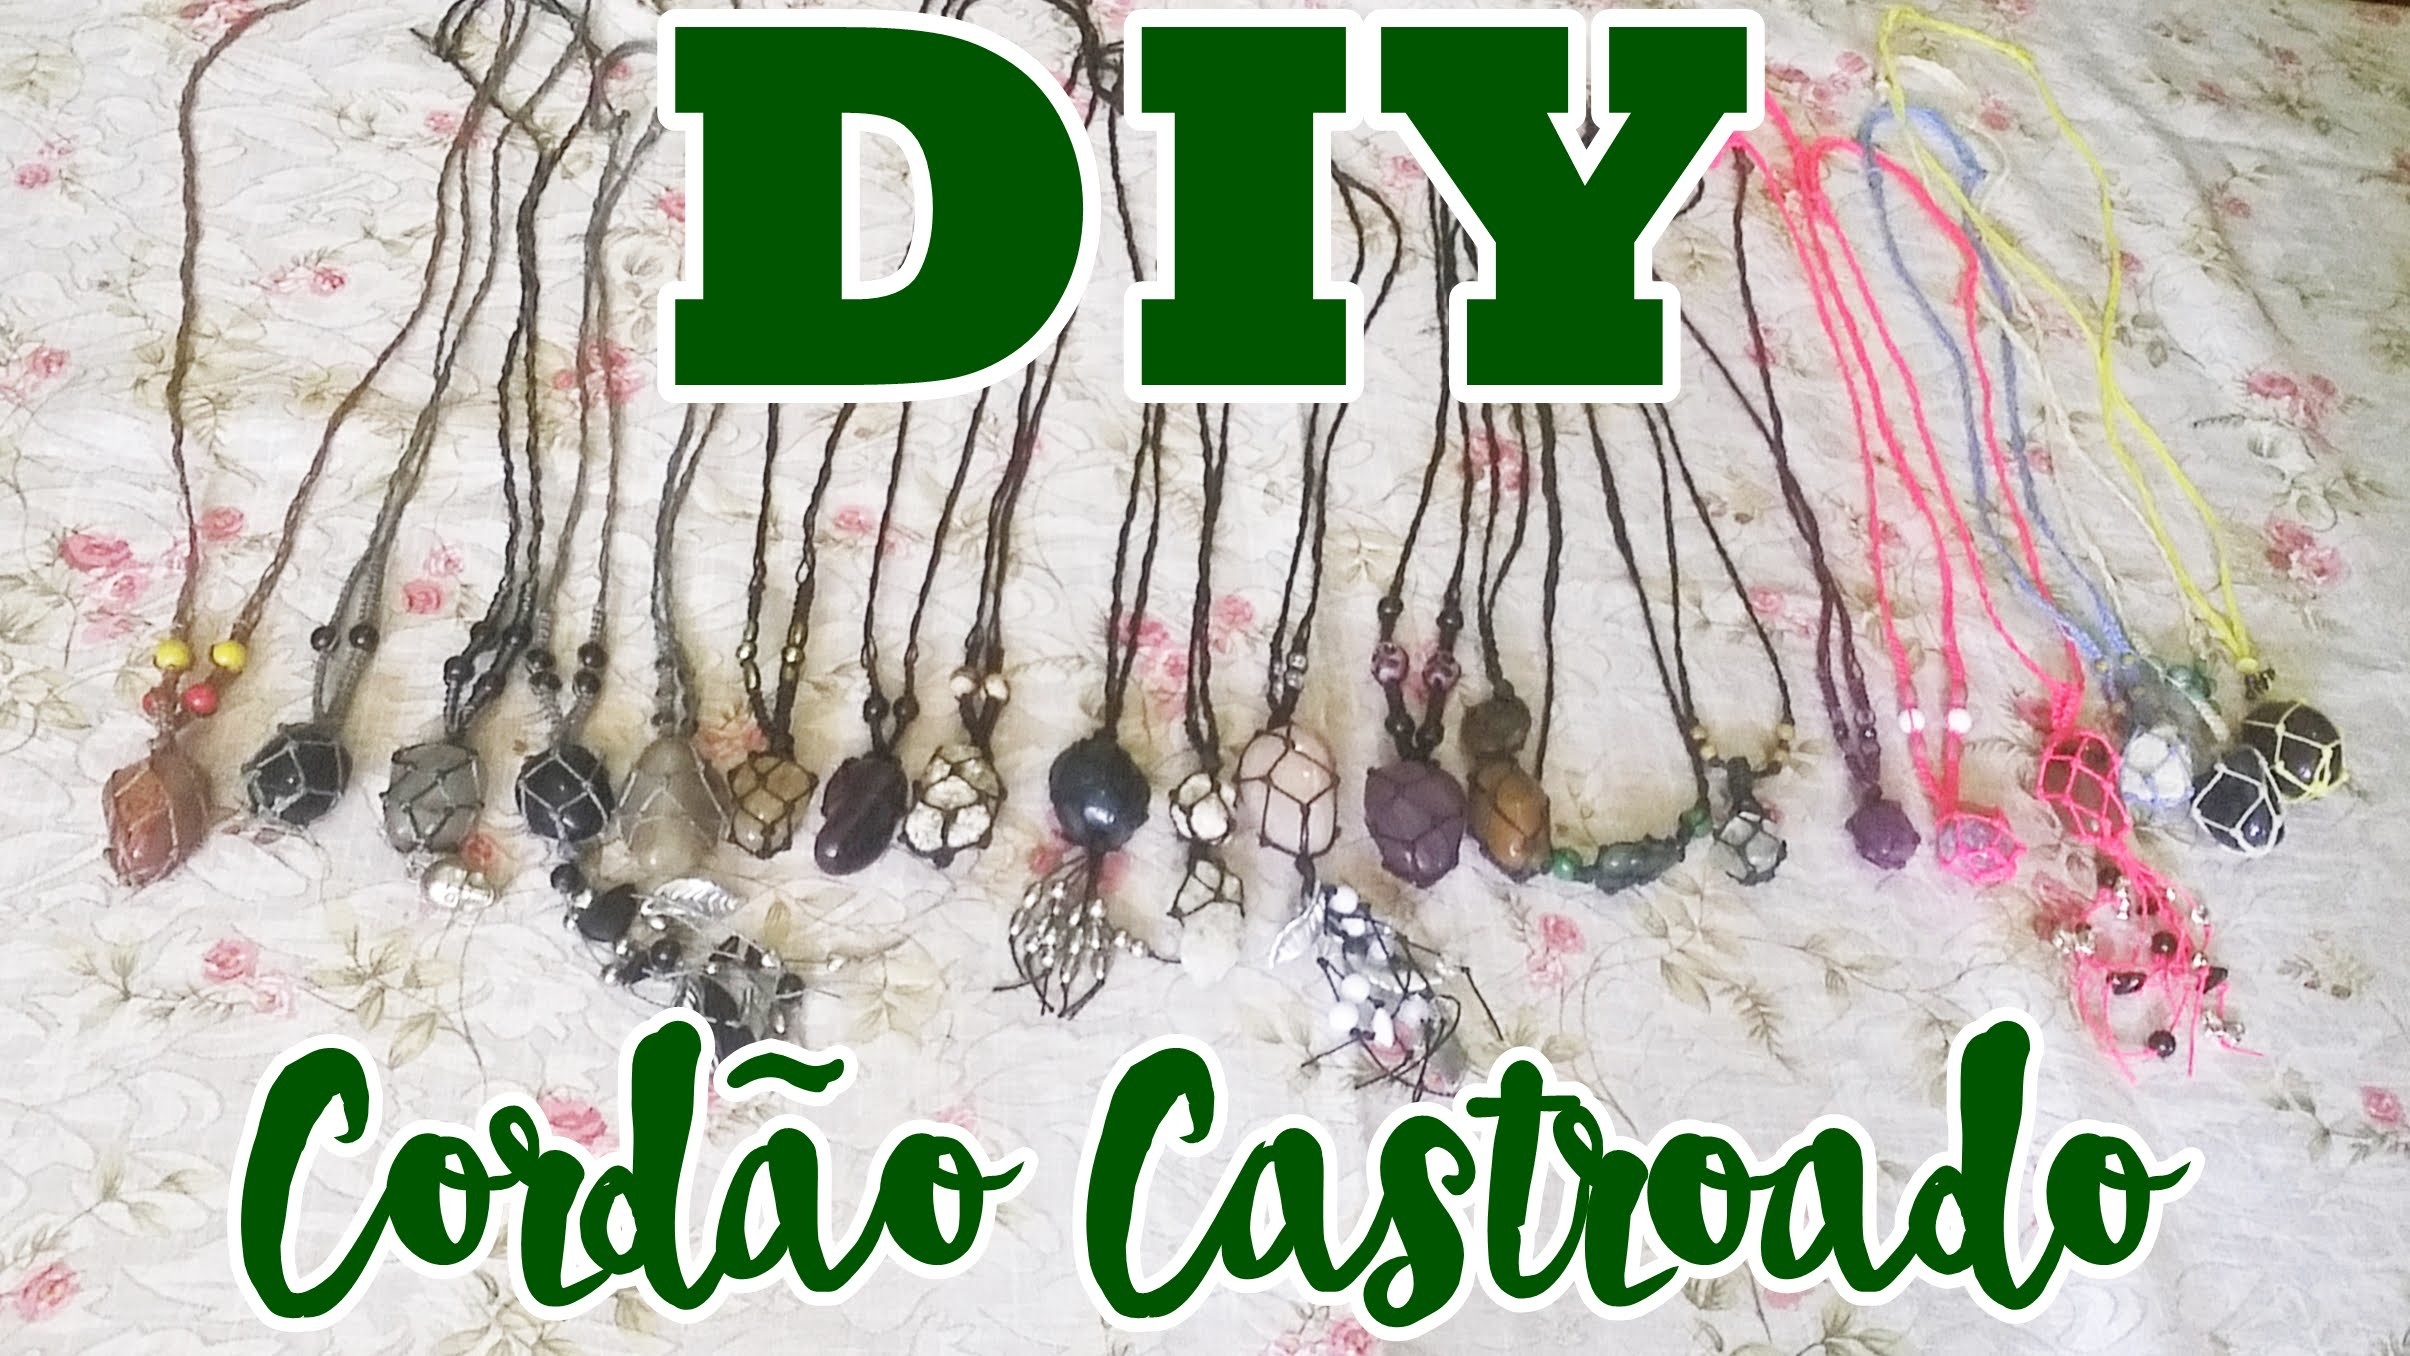 DIY: CORDÃO CASTROADO | Andrielly Neri